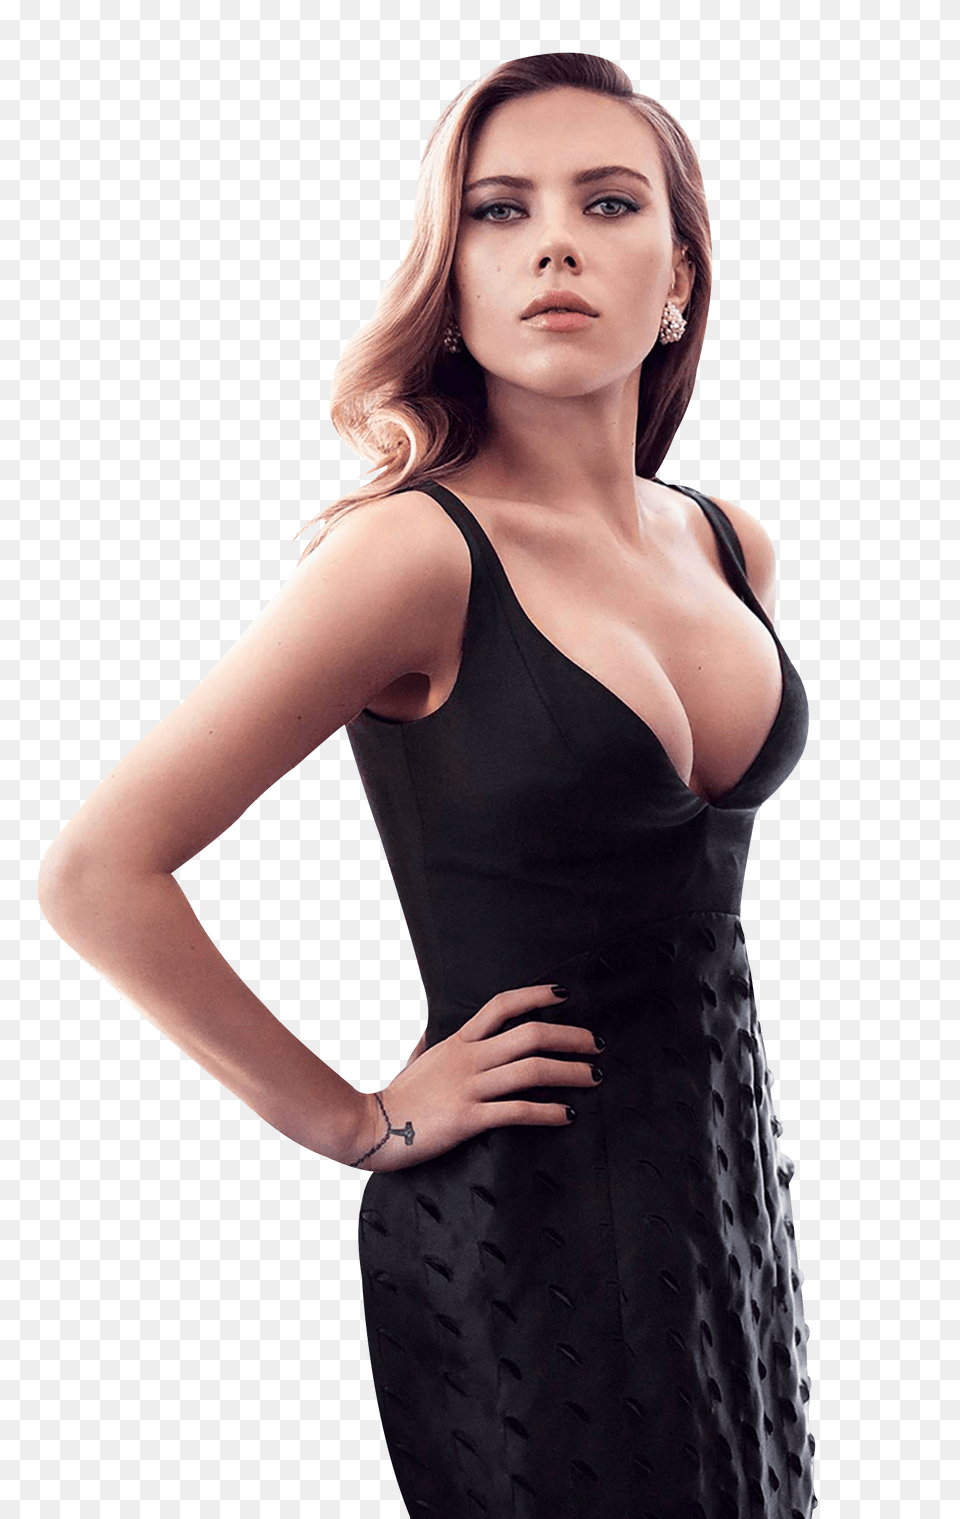 Pngpix Com Scarlett Johansson Transparent Image, Adult, Person, Formal Wear, Female Png